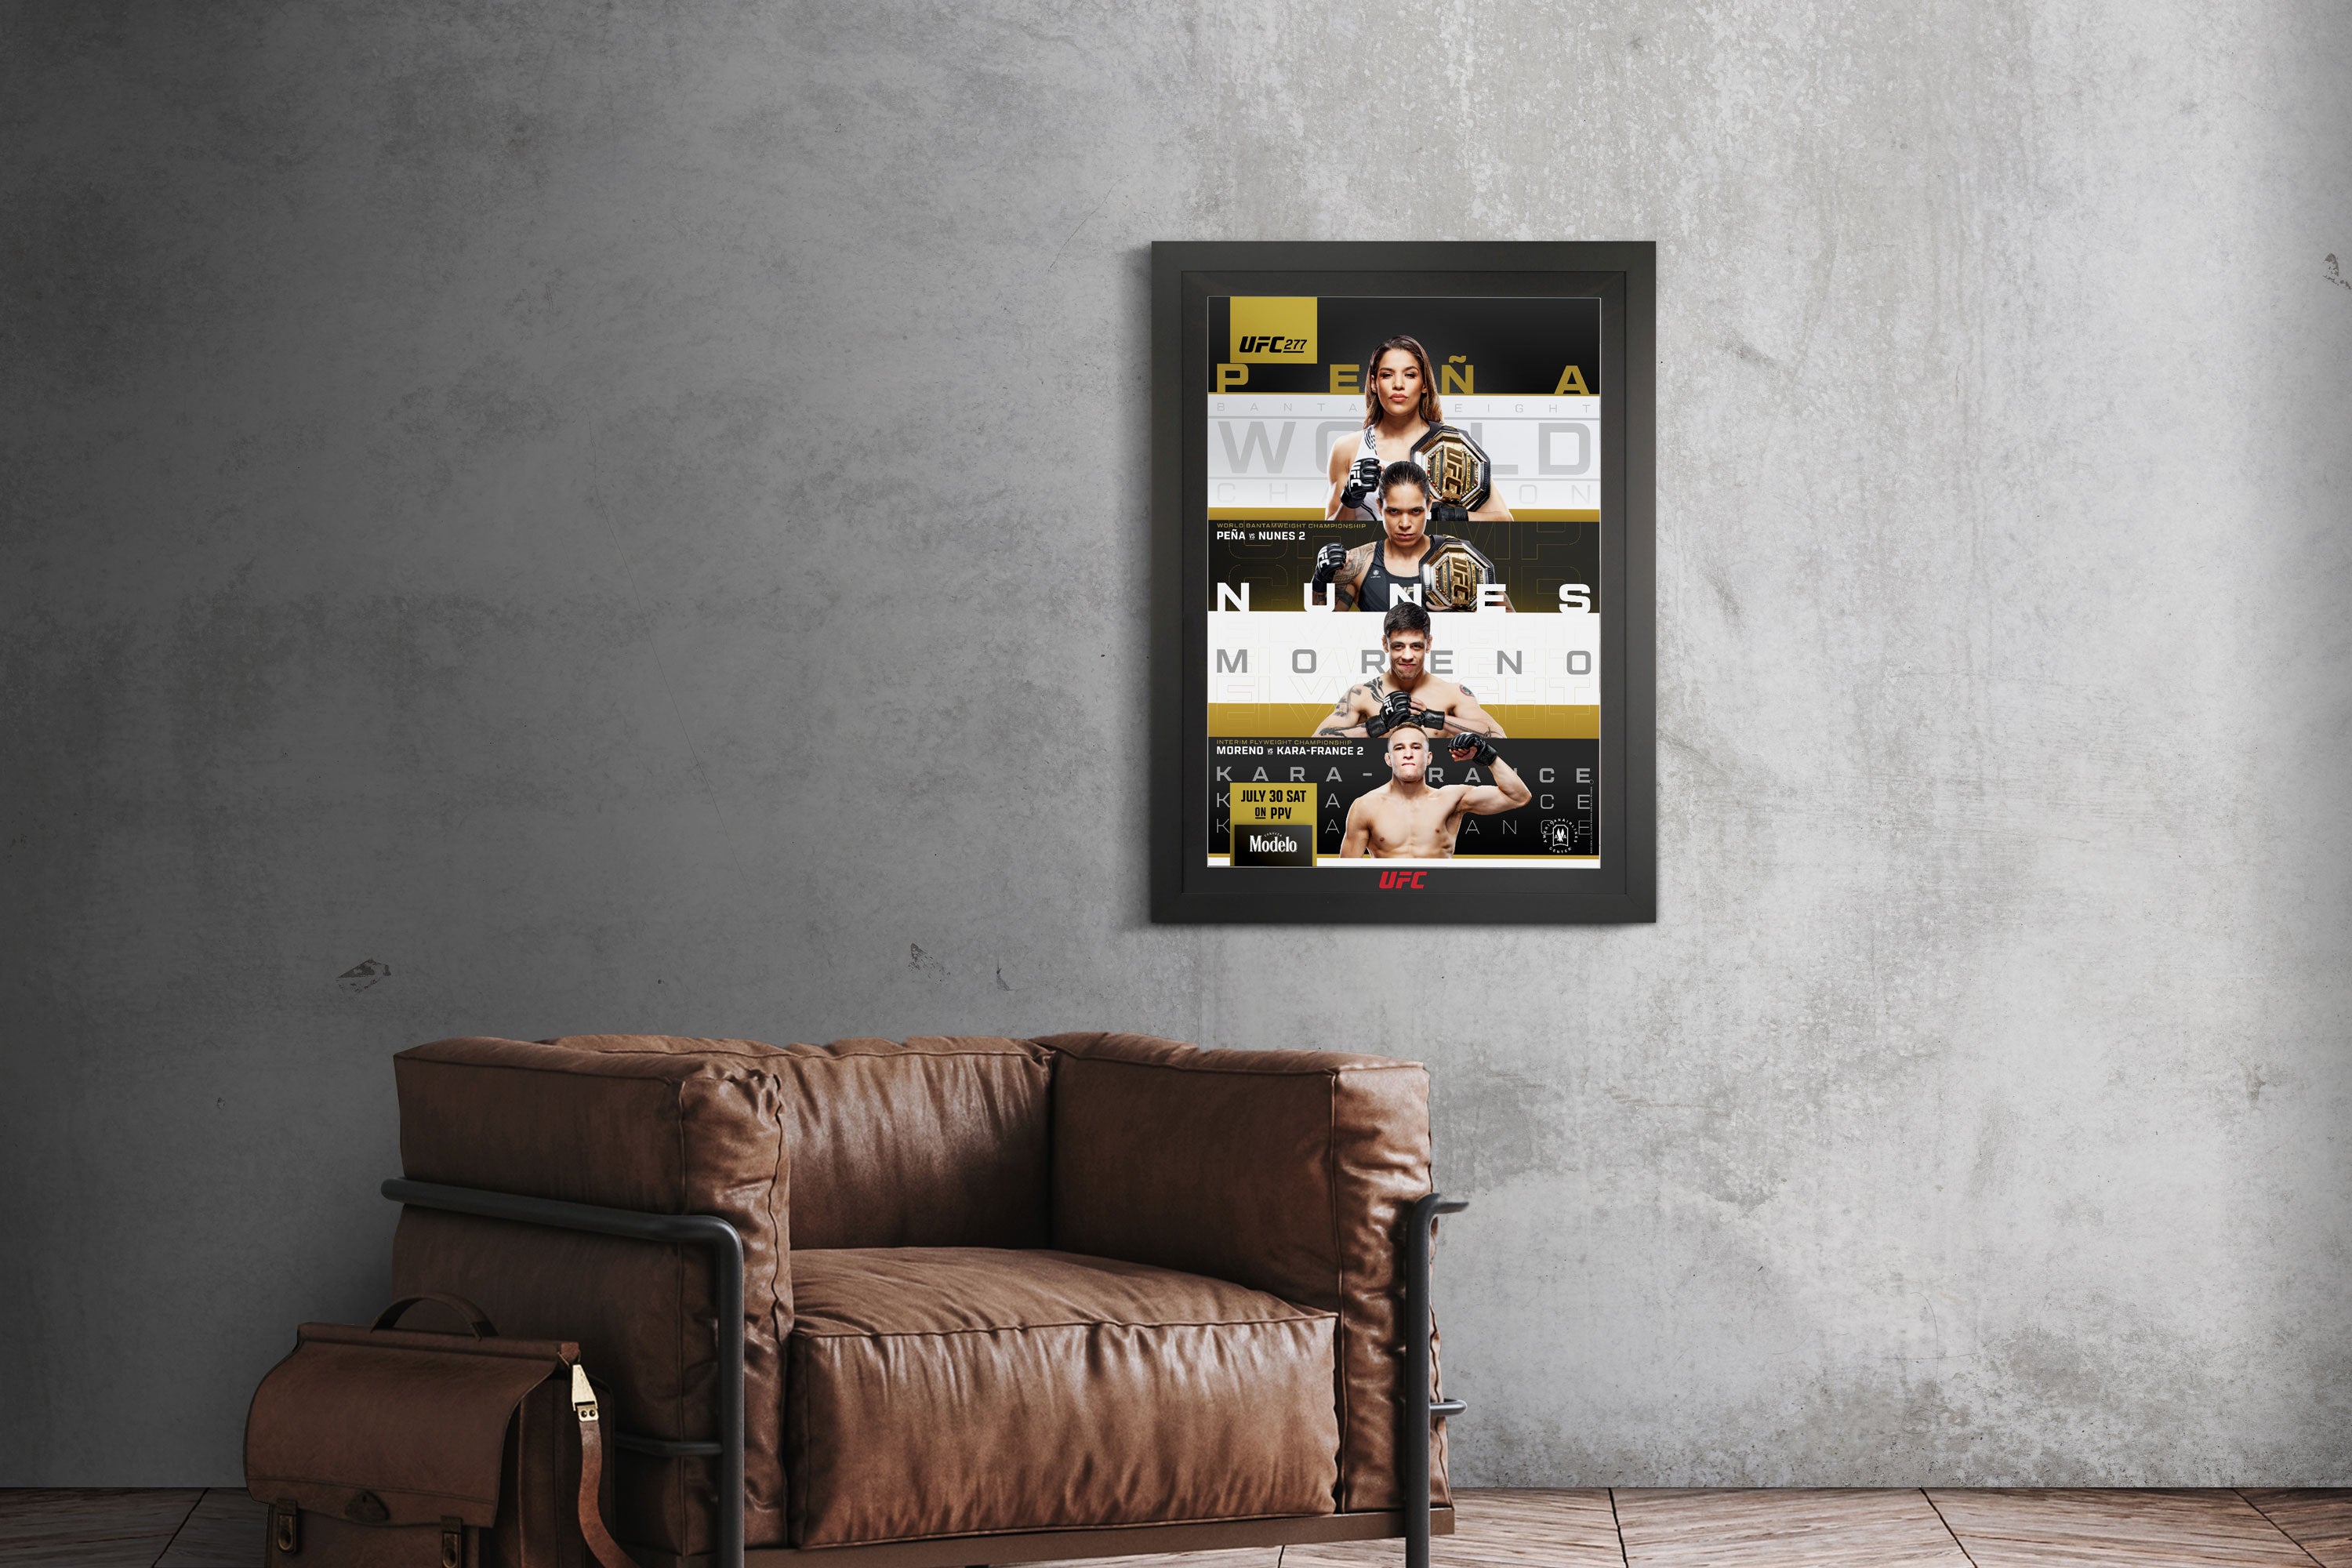 Event poster from the Pena vs Nunes UFC 277 event 